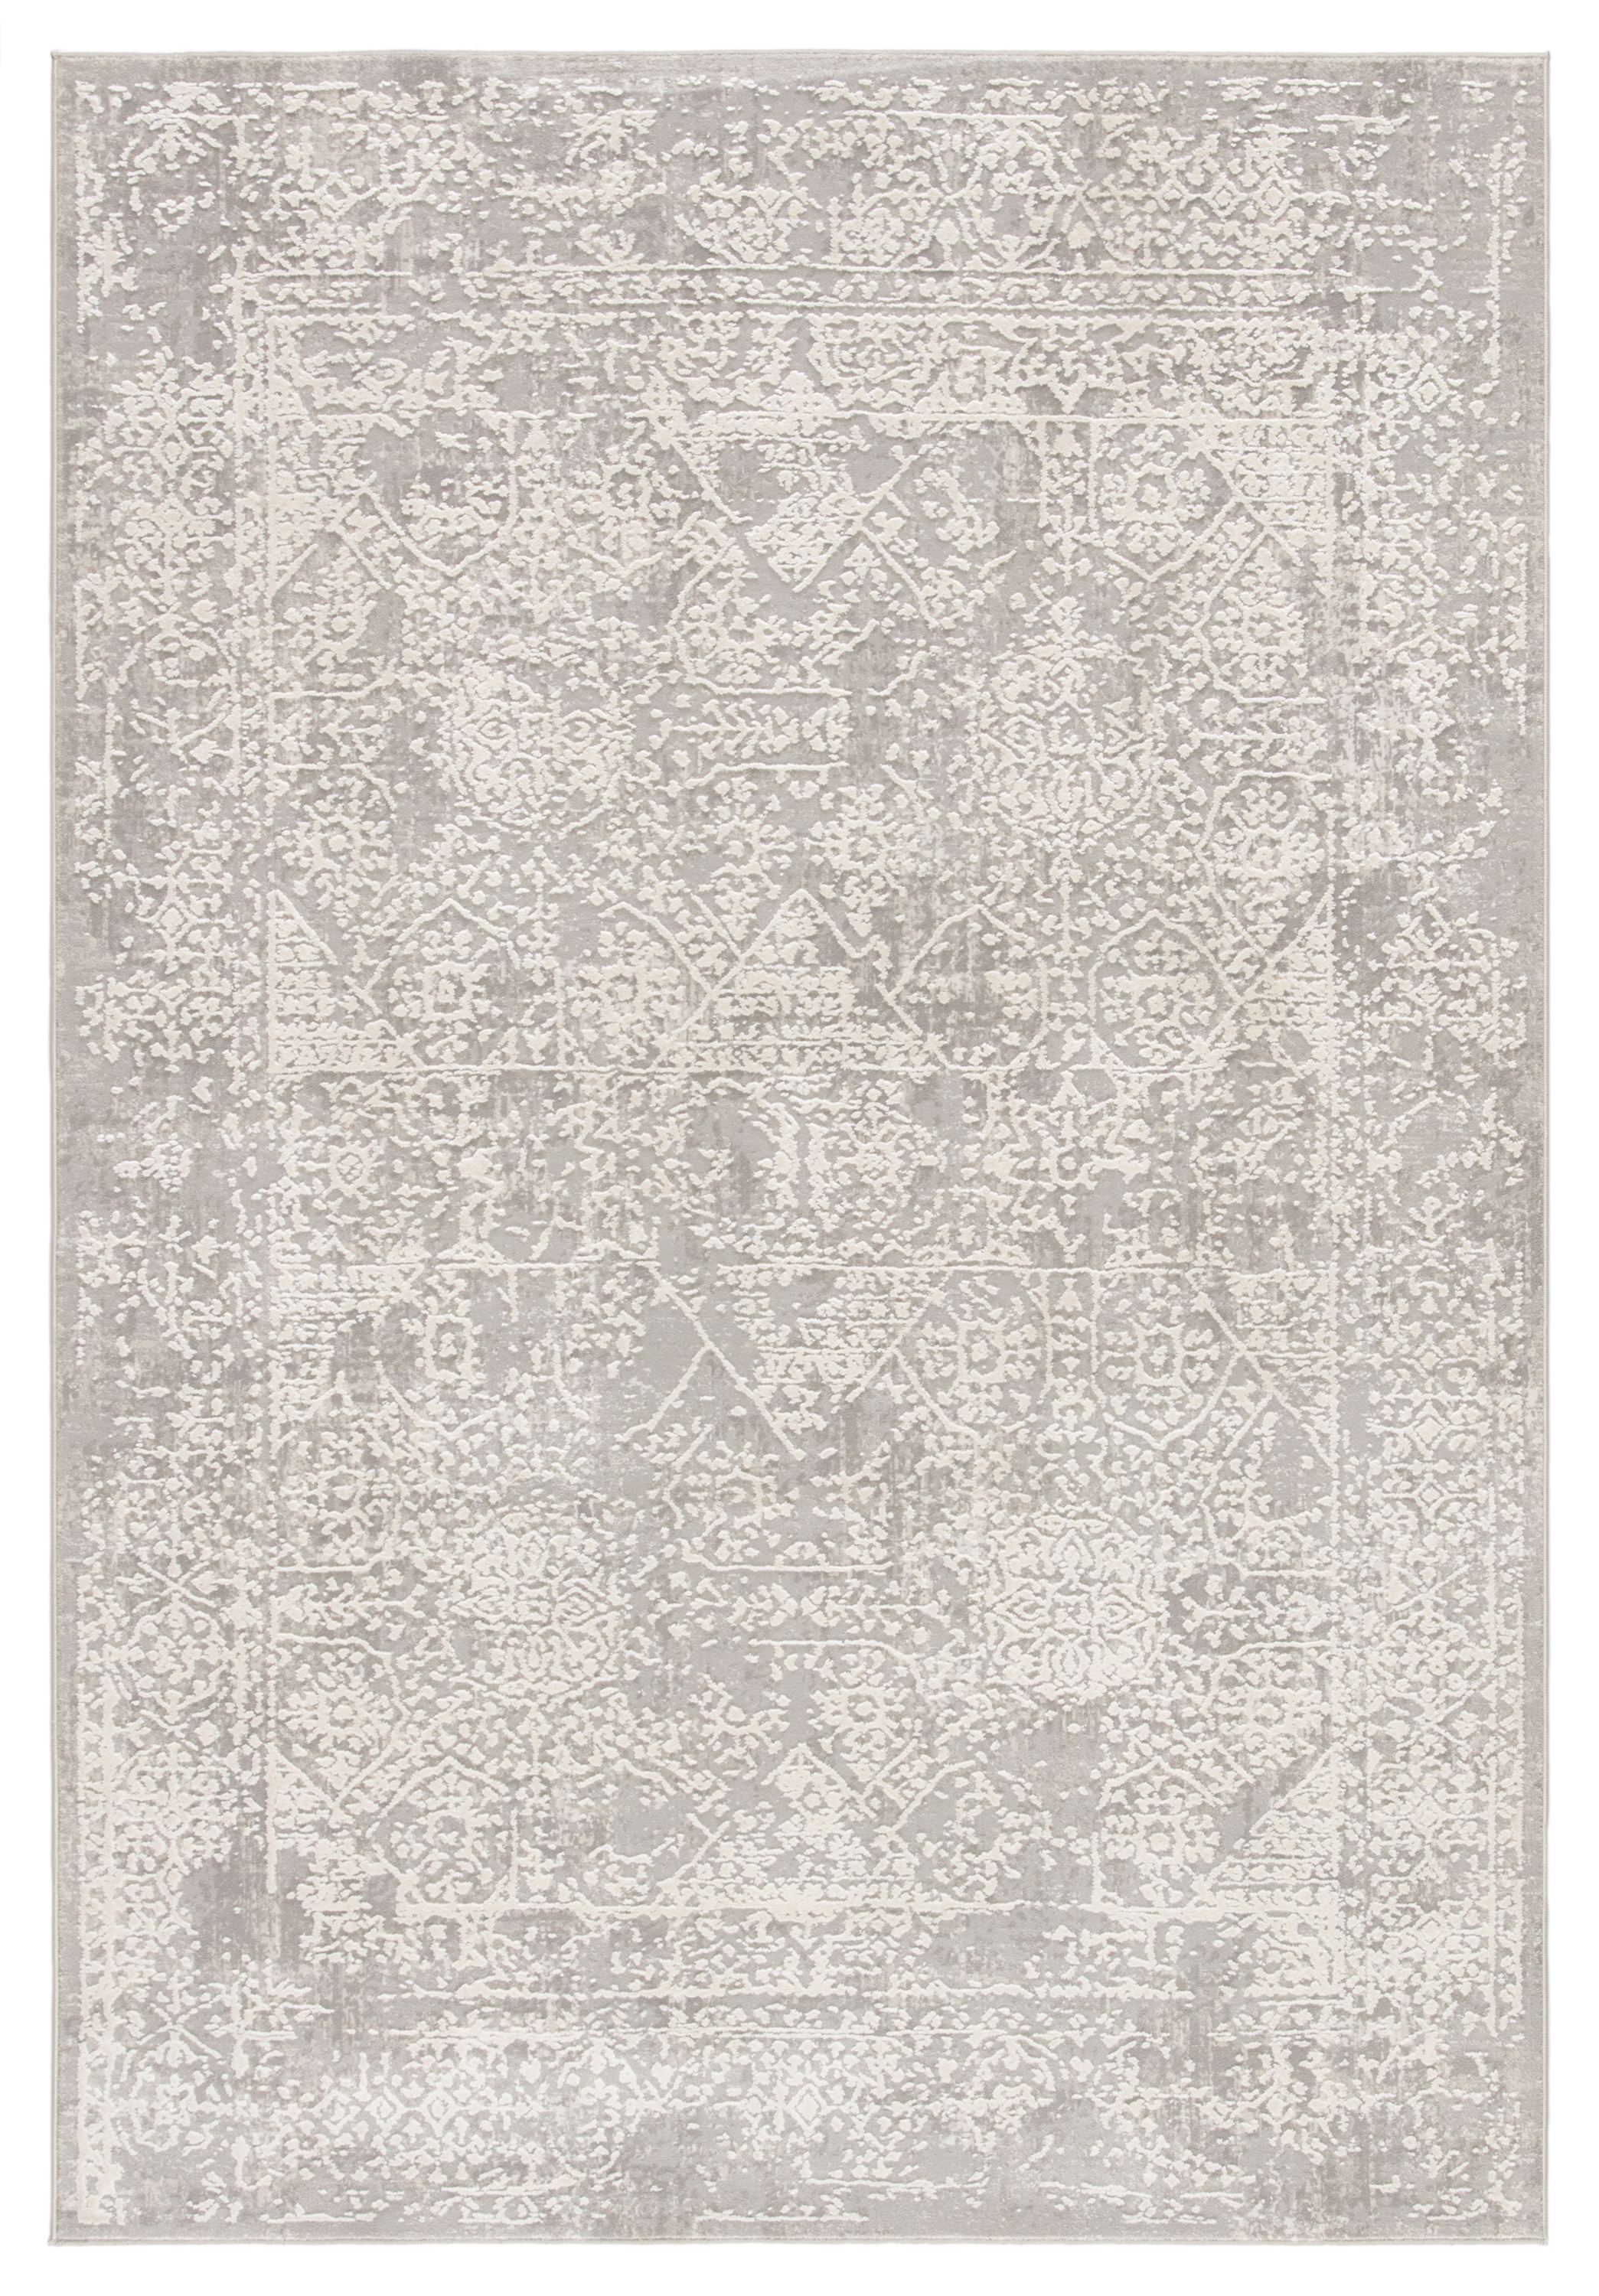 Lianna Abstract Gray/ White Area Rug (10' X 14') - Image 0